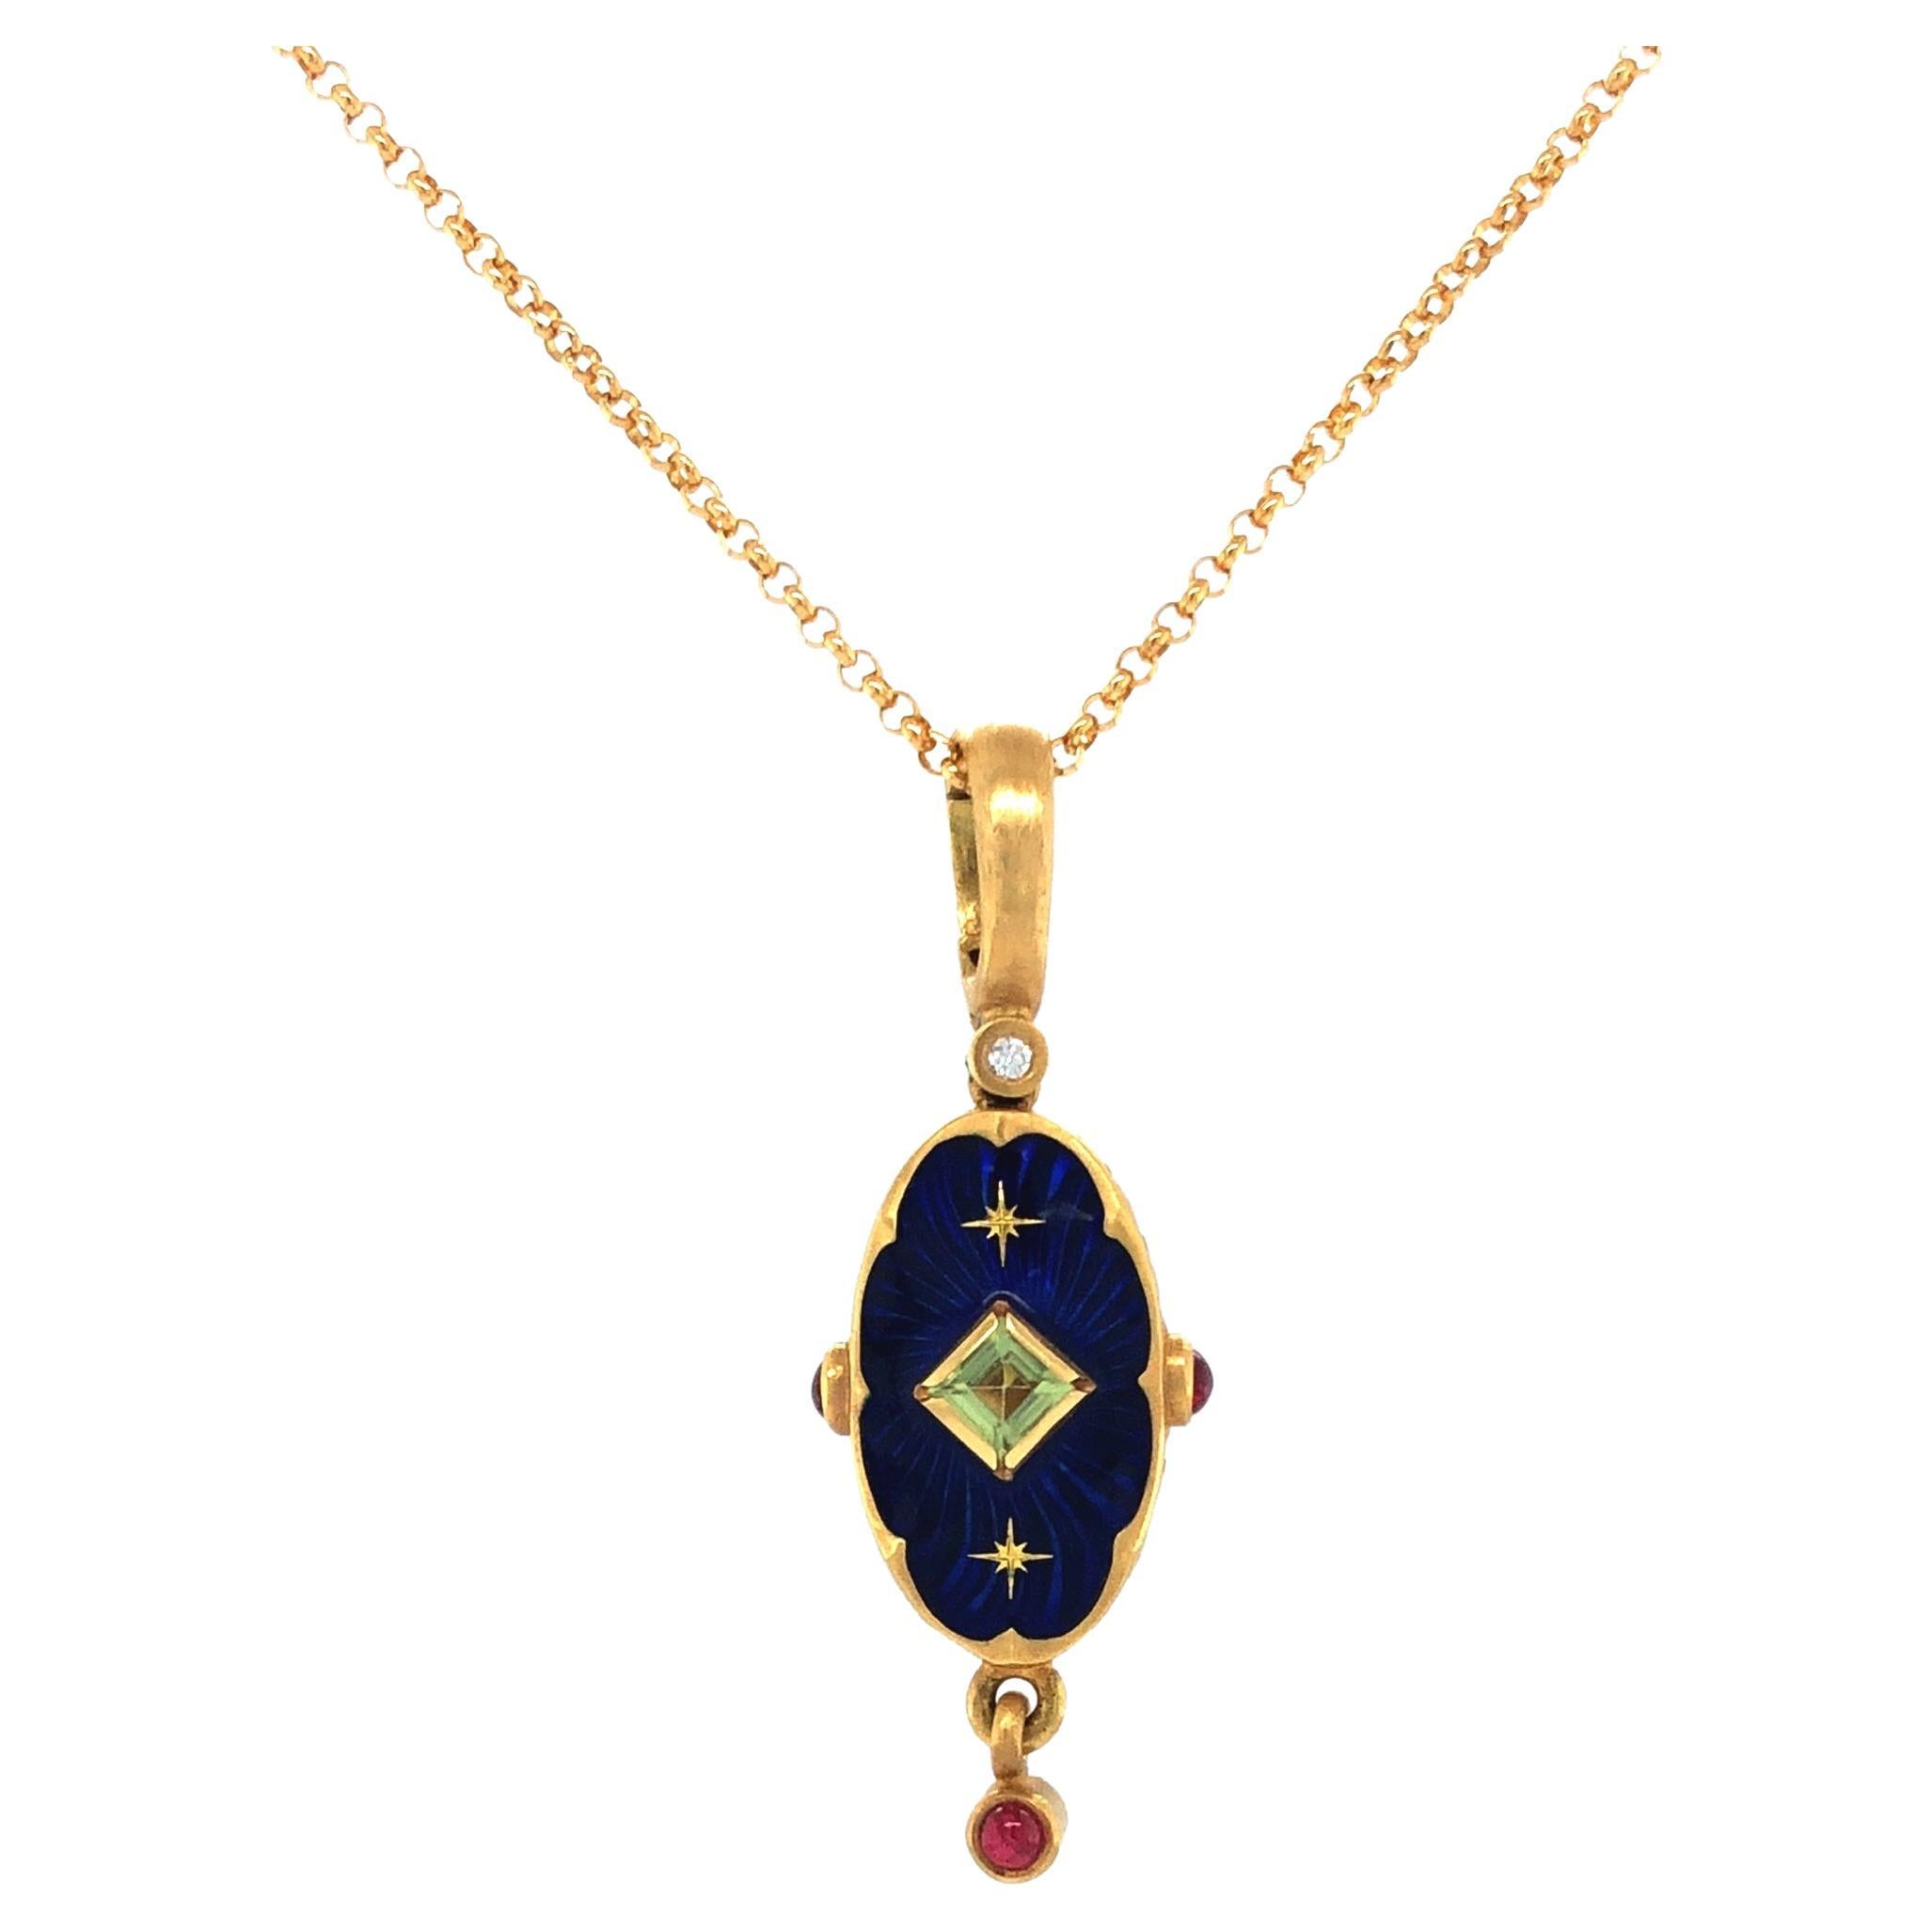 Collier pendentif ovale en or jaune 18 carats, émail bleu, 1 péridot 3 rubis 2 étoiles